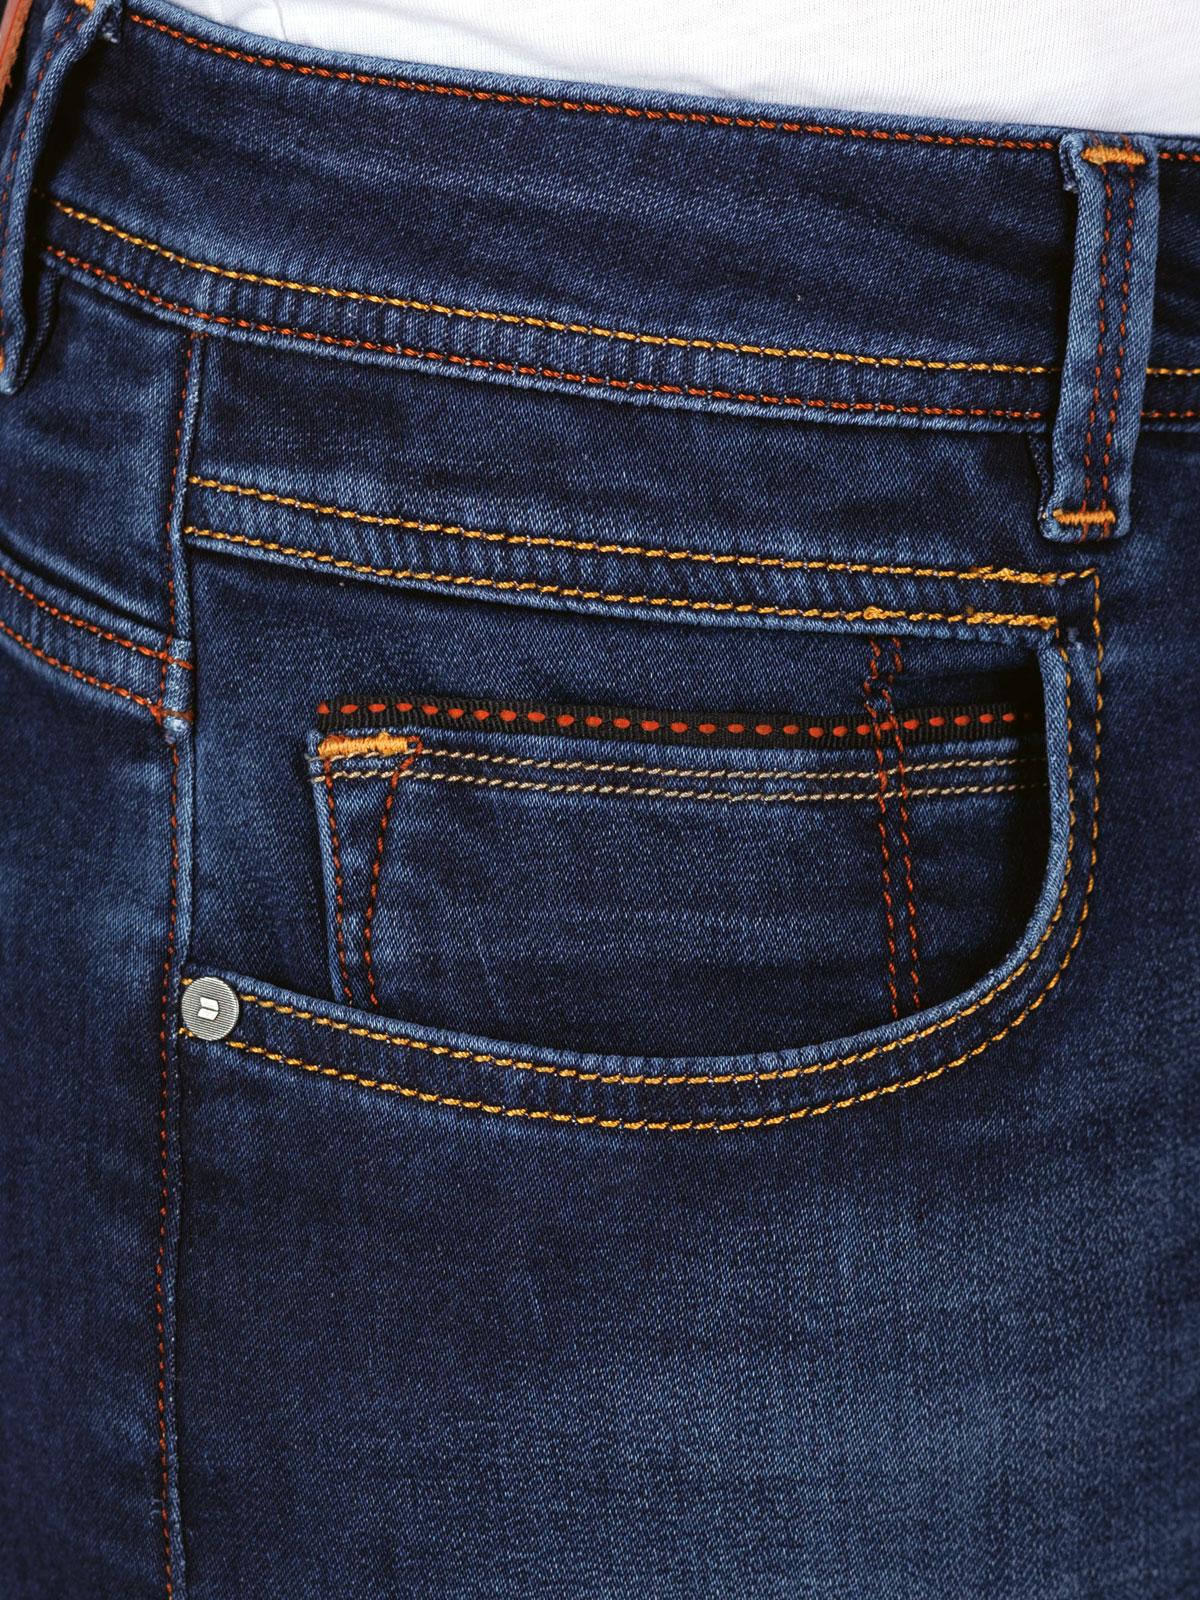 Jeans in dark blue color - 62164 € 61.30 img2